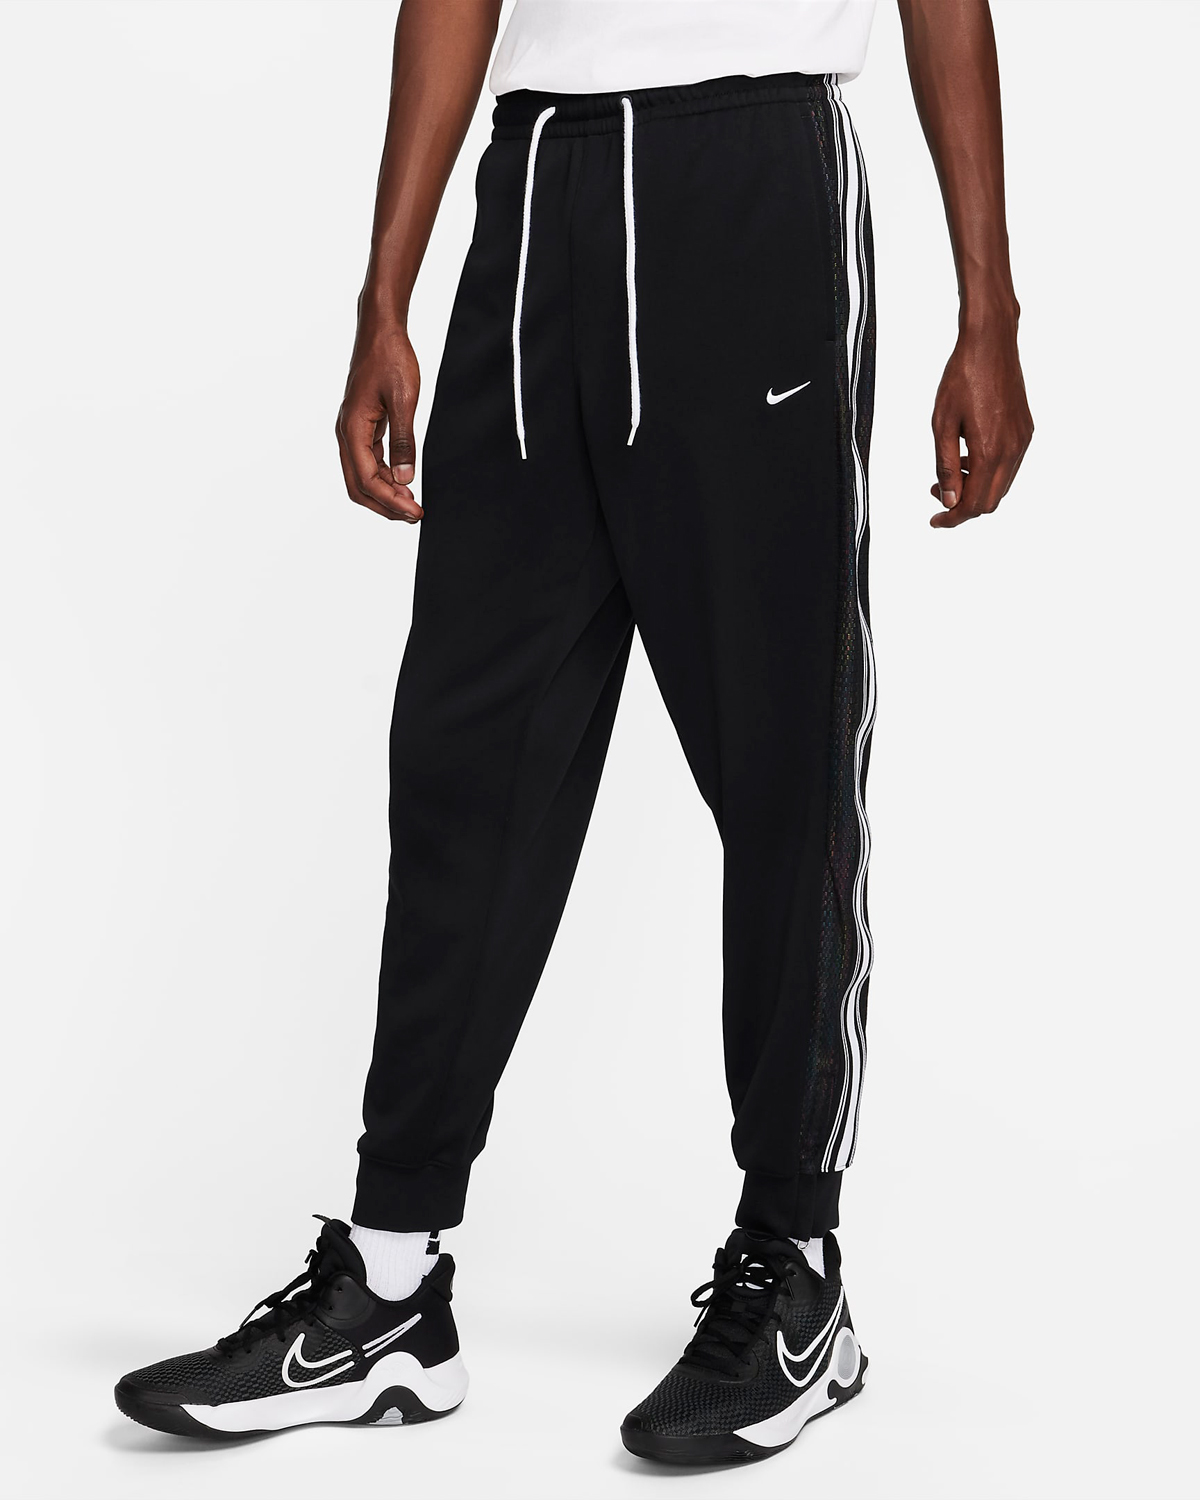 Nike-Lightweight-Basketball-Pants-Black-White